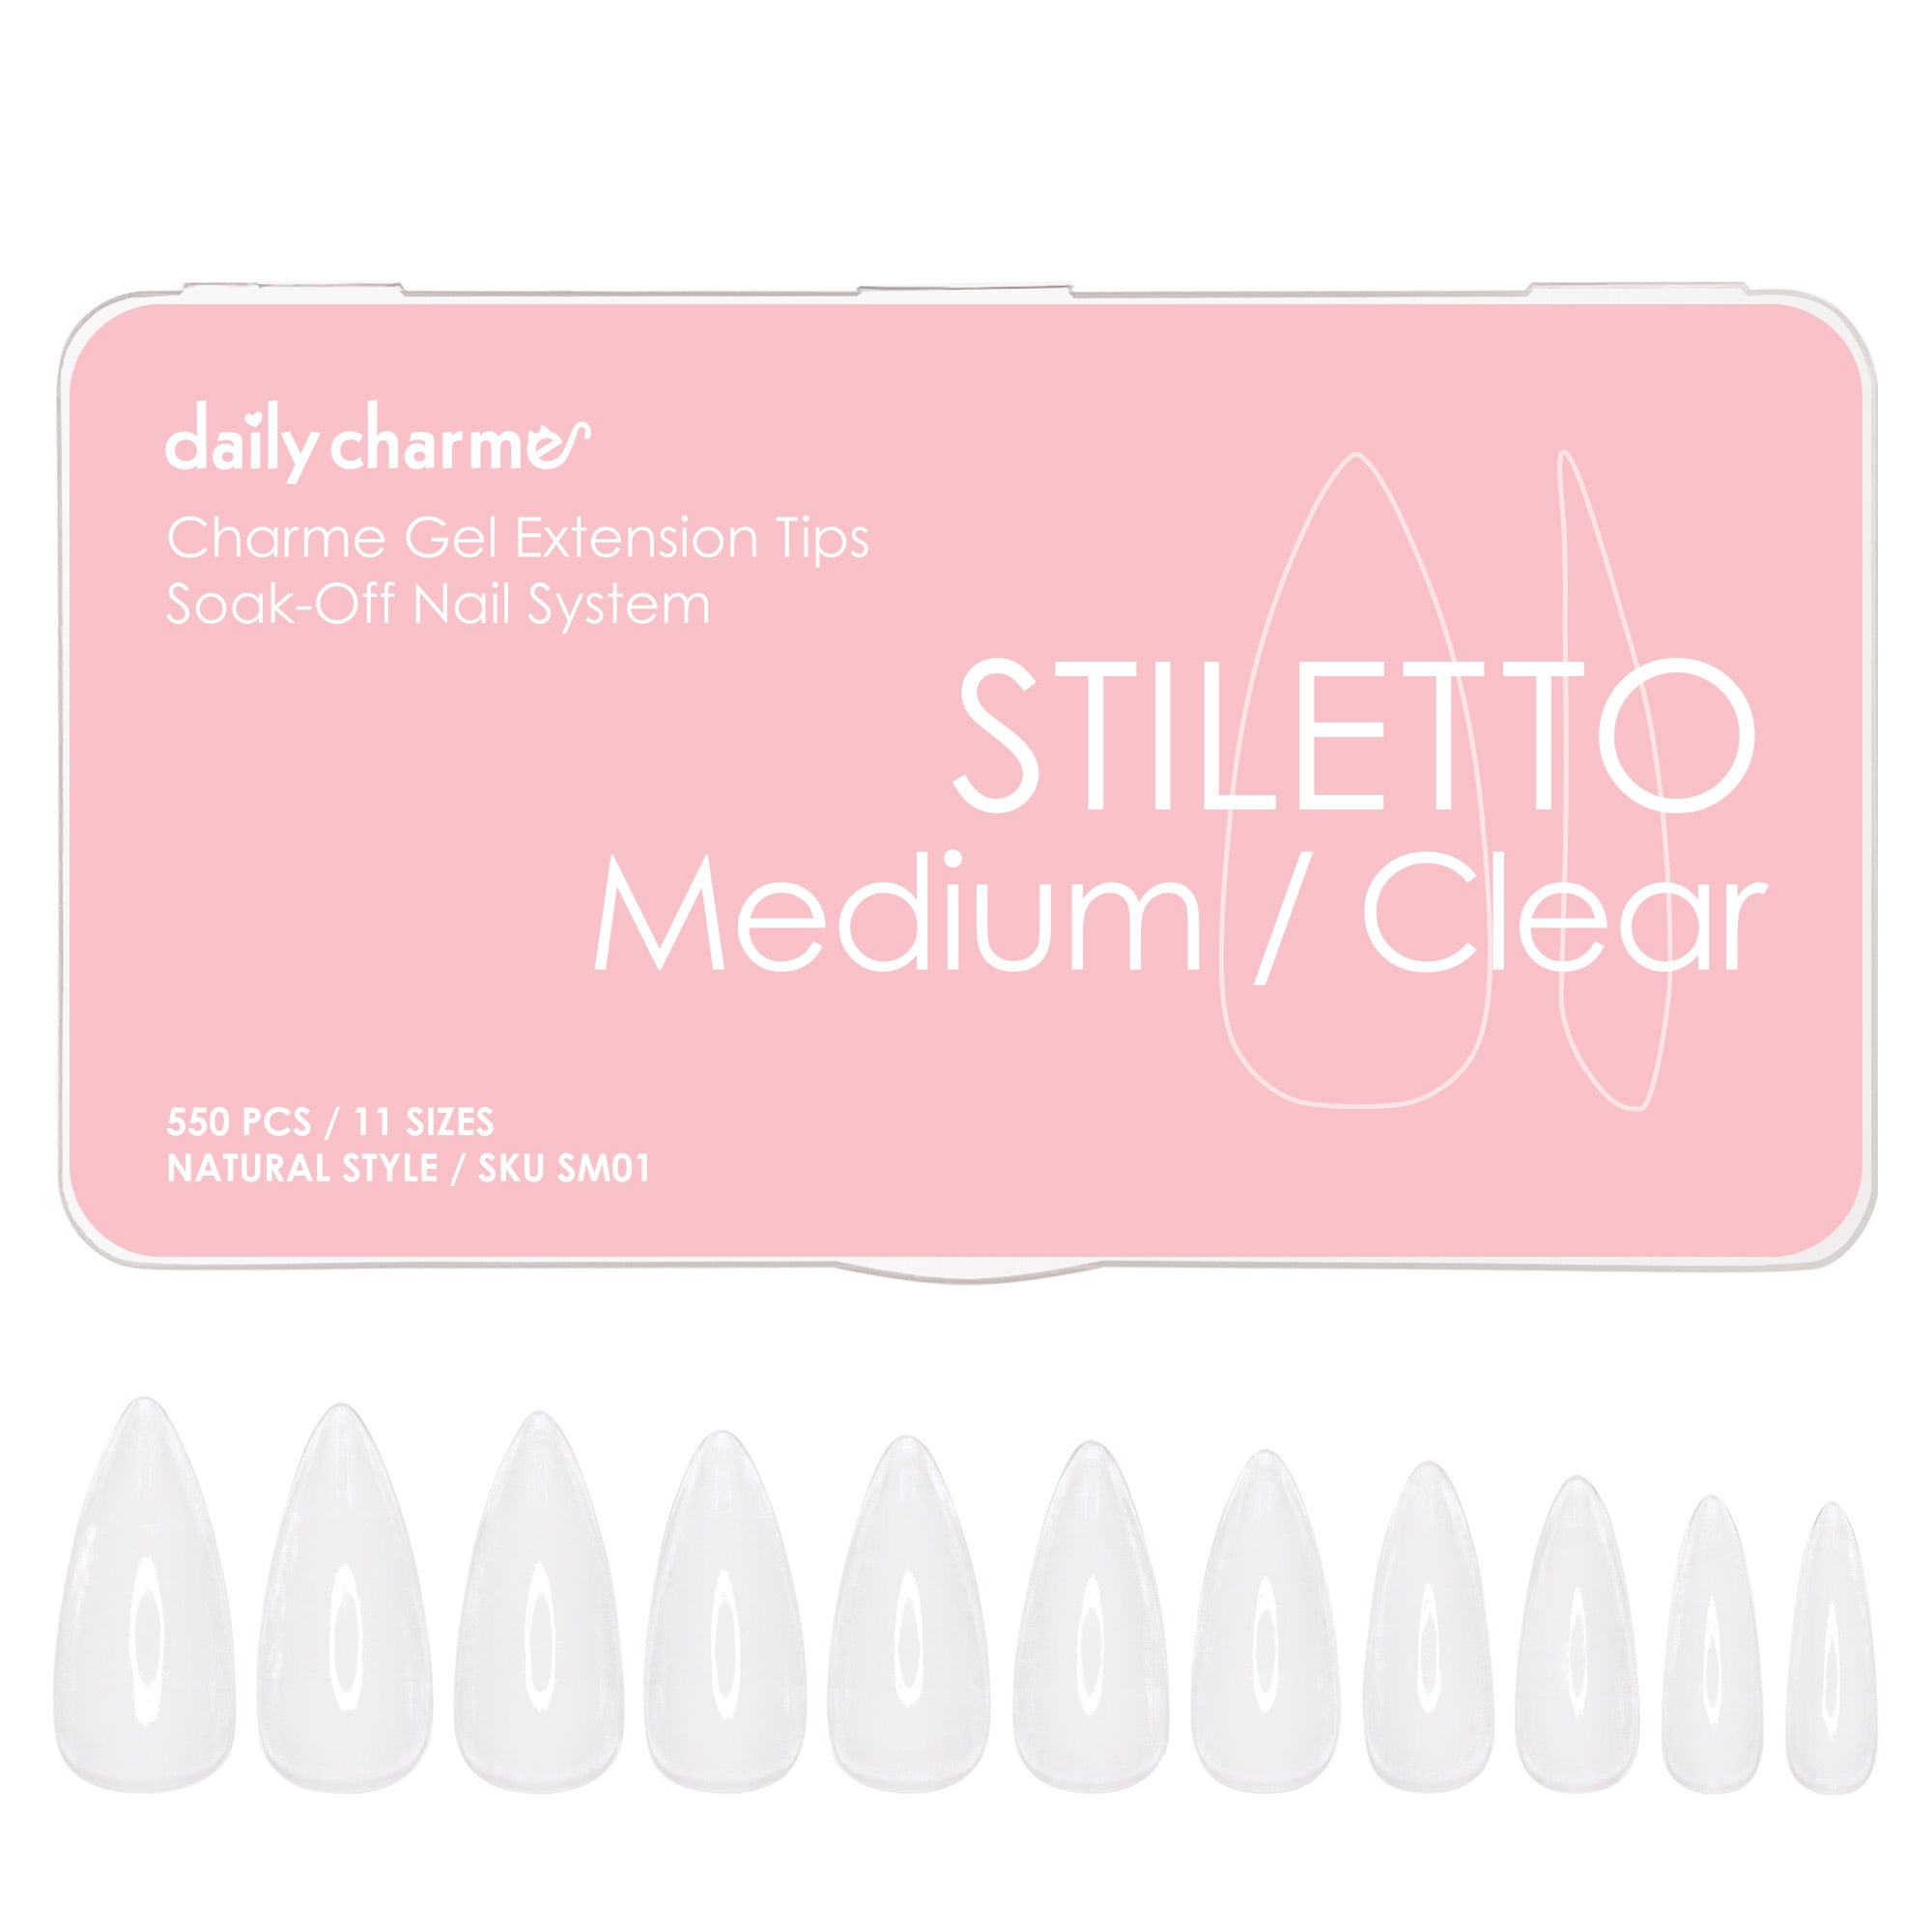 Charme Gel Extension Tips / Stiletto / Medium / Clear